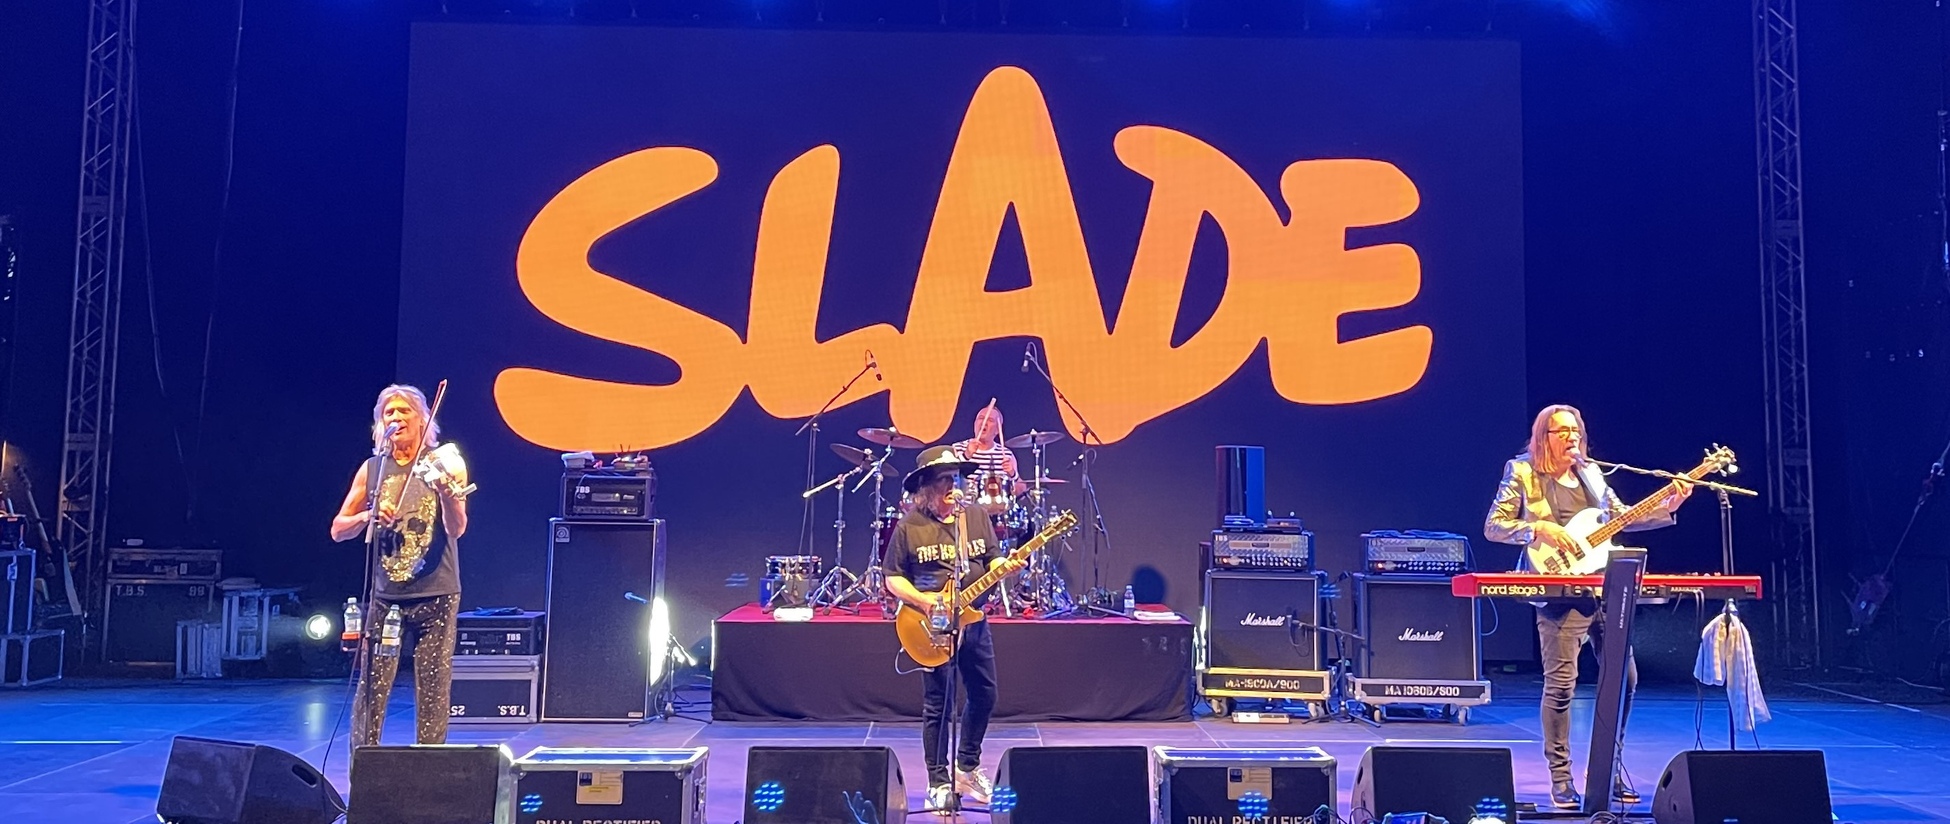 Slade